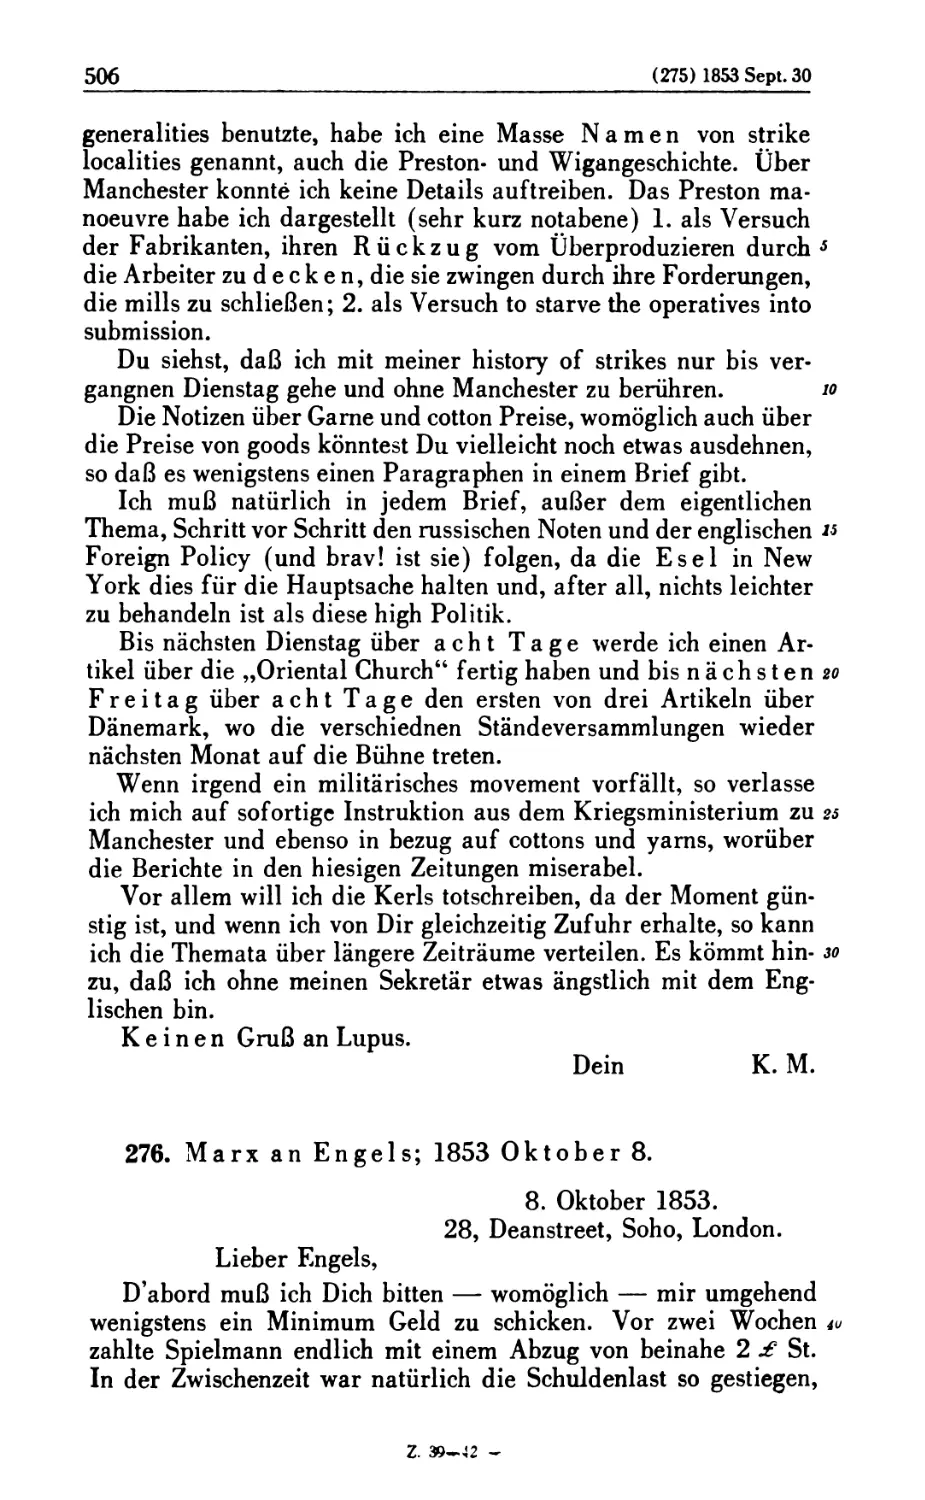 276. Marx an Engels; 1853 Oktober 8